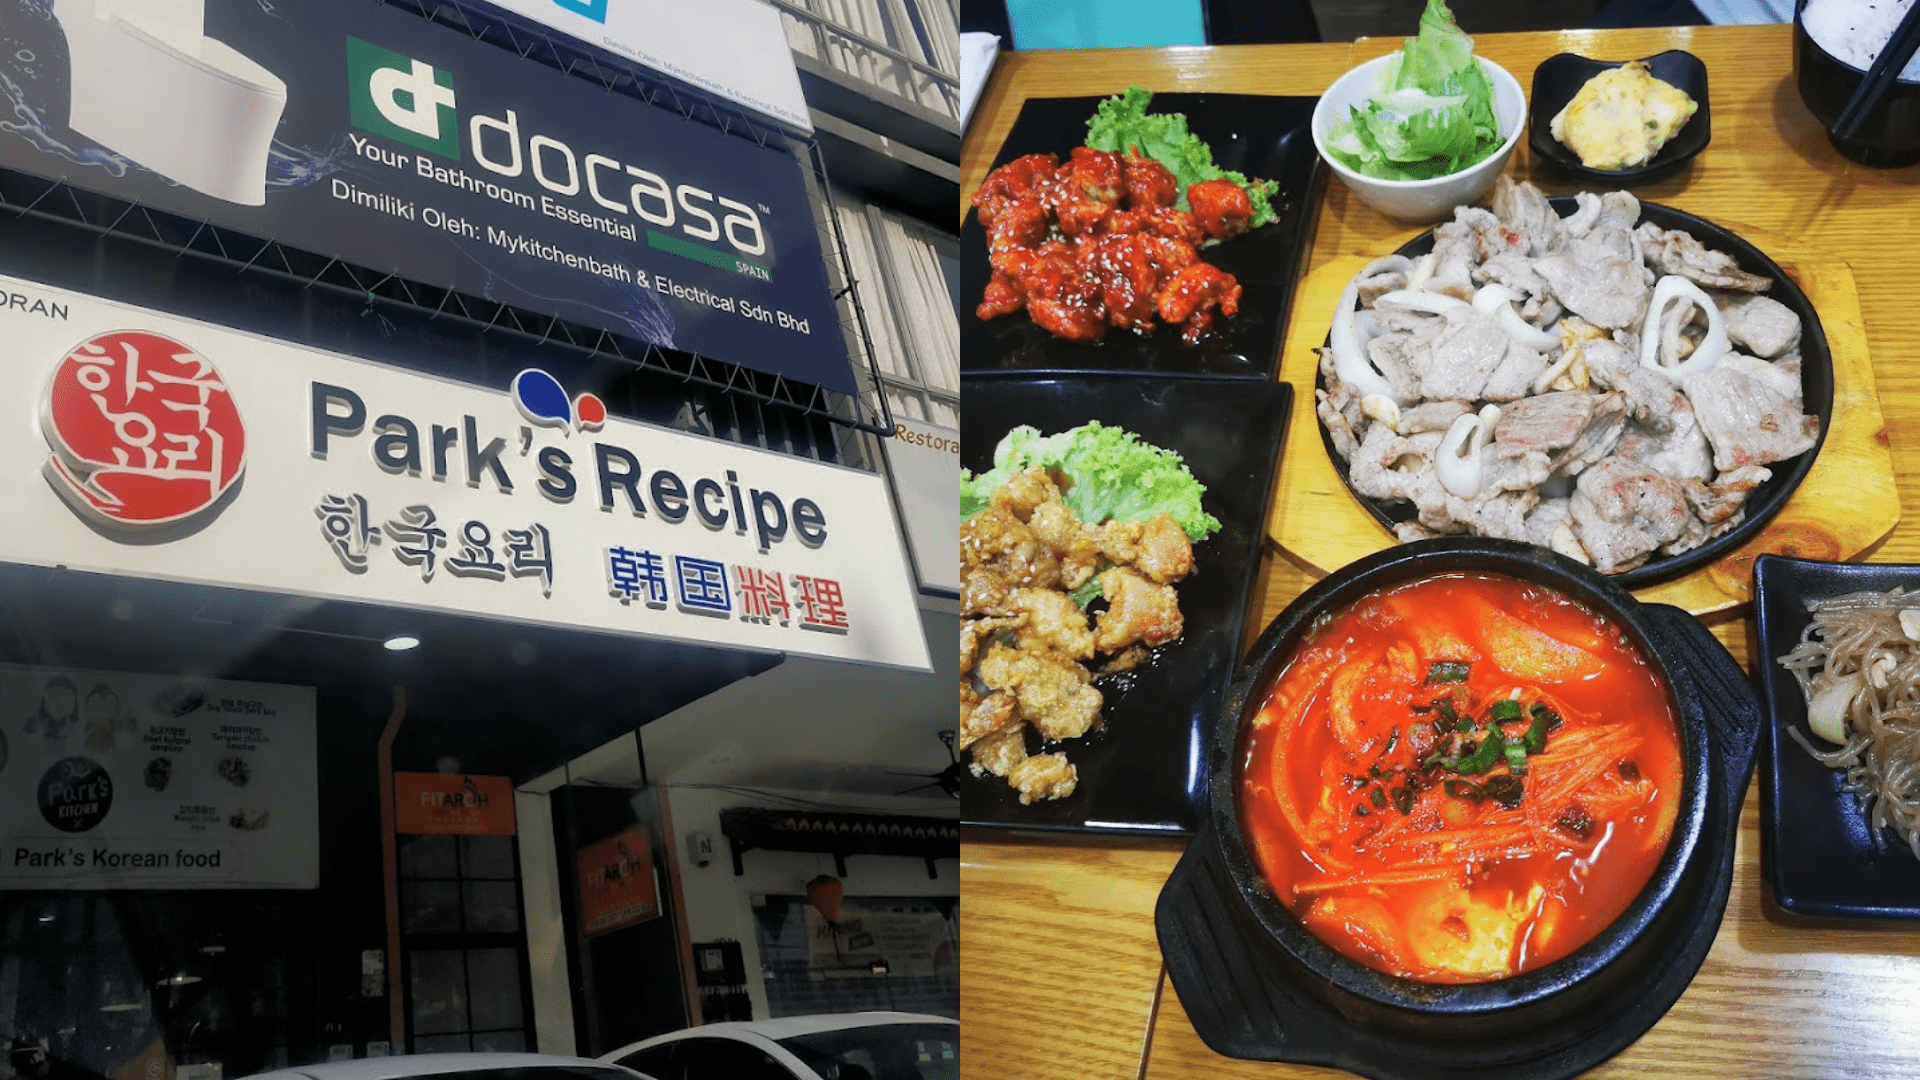 best Korean BBQ in Penang